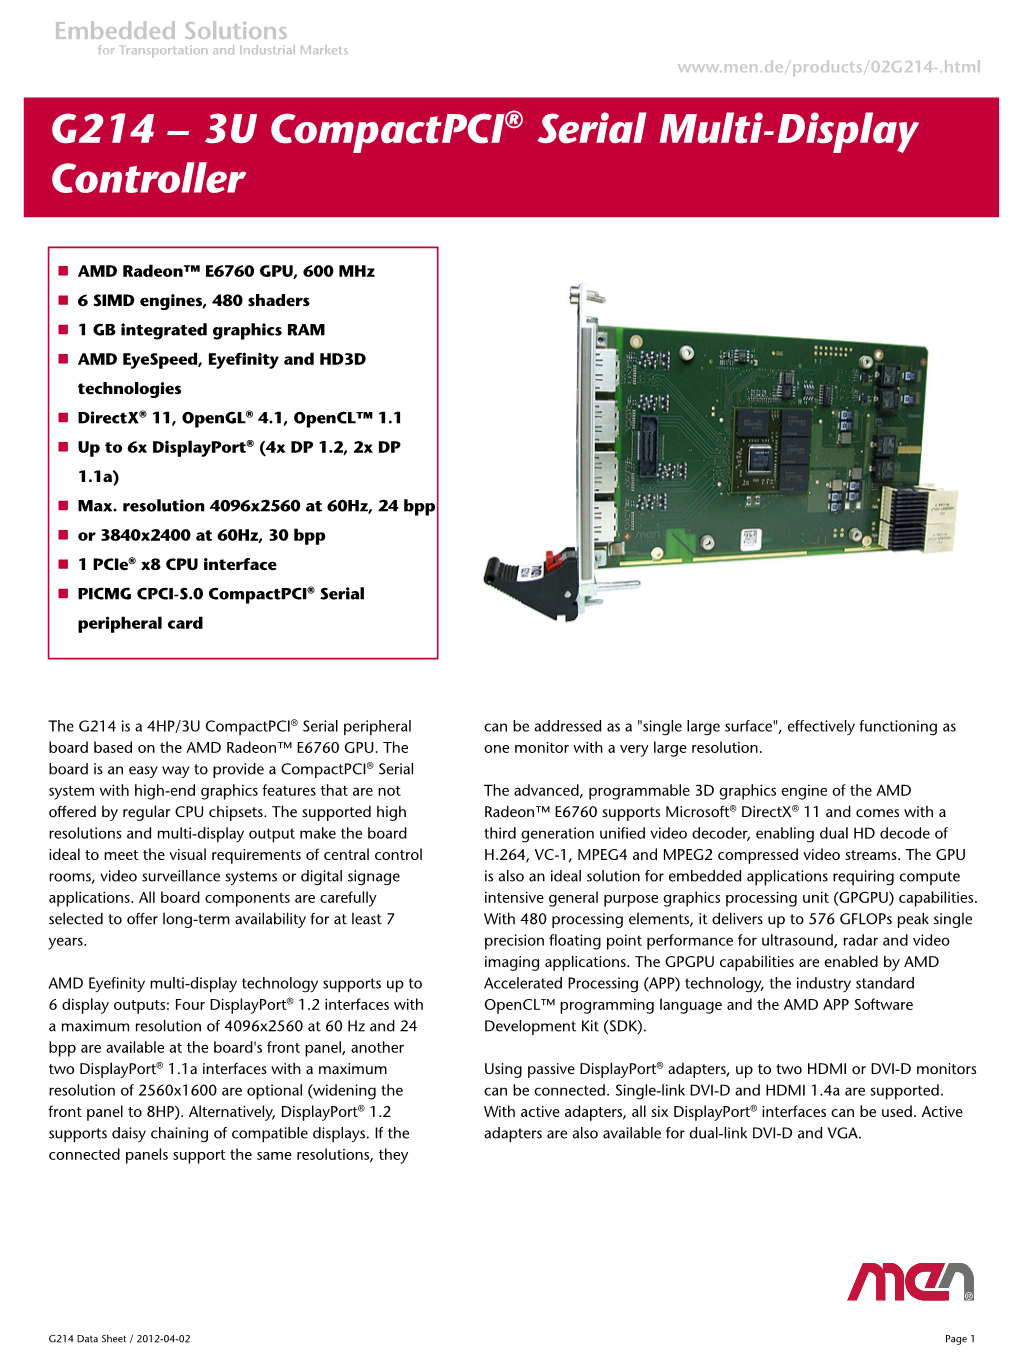 G214 – 3U Compactpci® Serial Multi-Display Controller